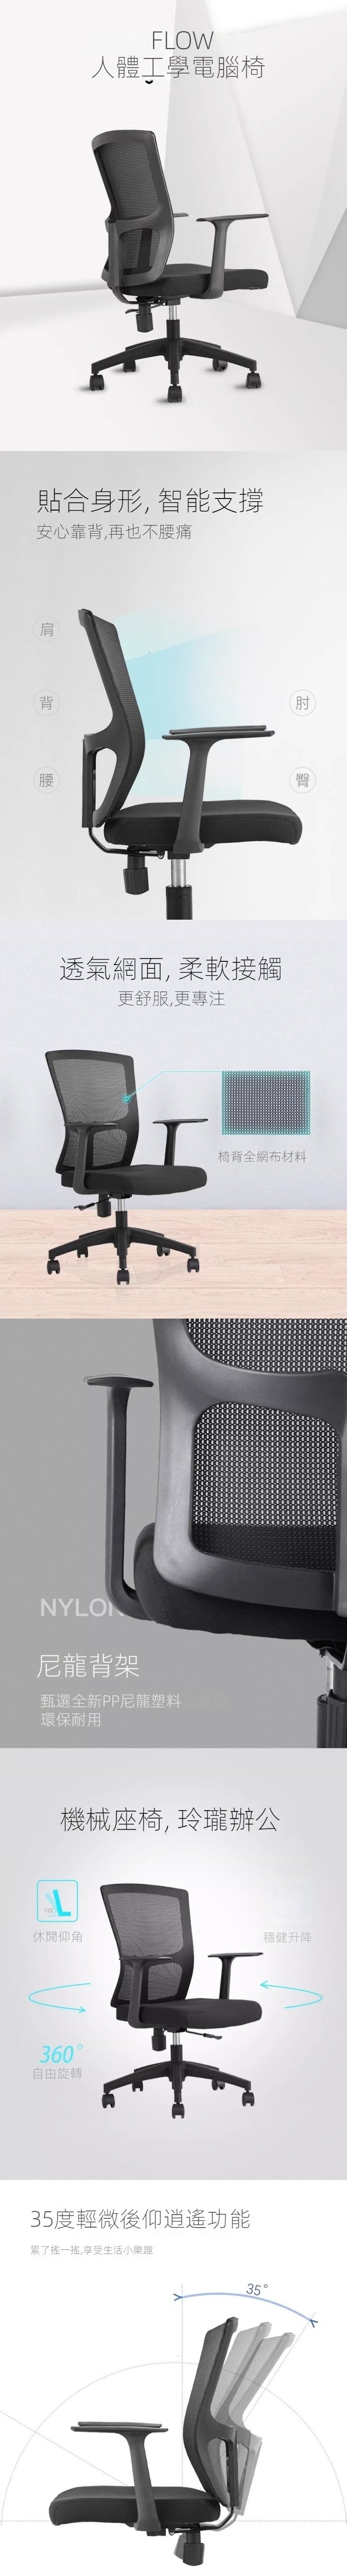 Flow Mid Back Ergonomic Office Chair